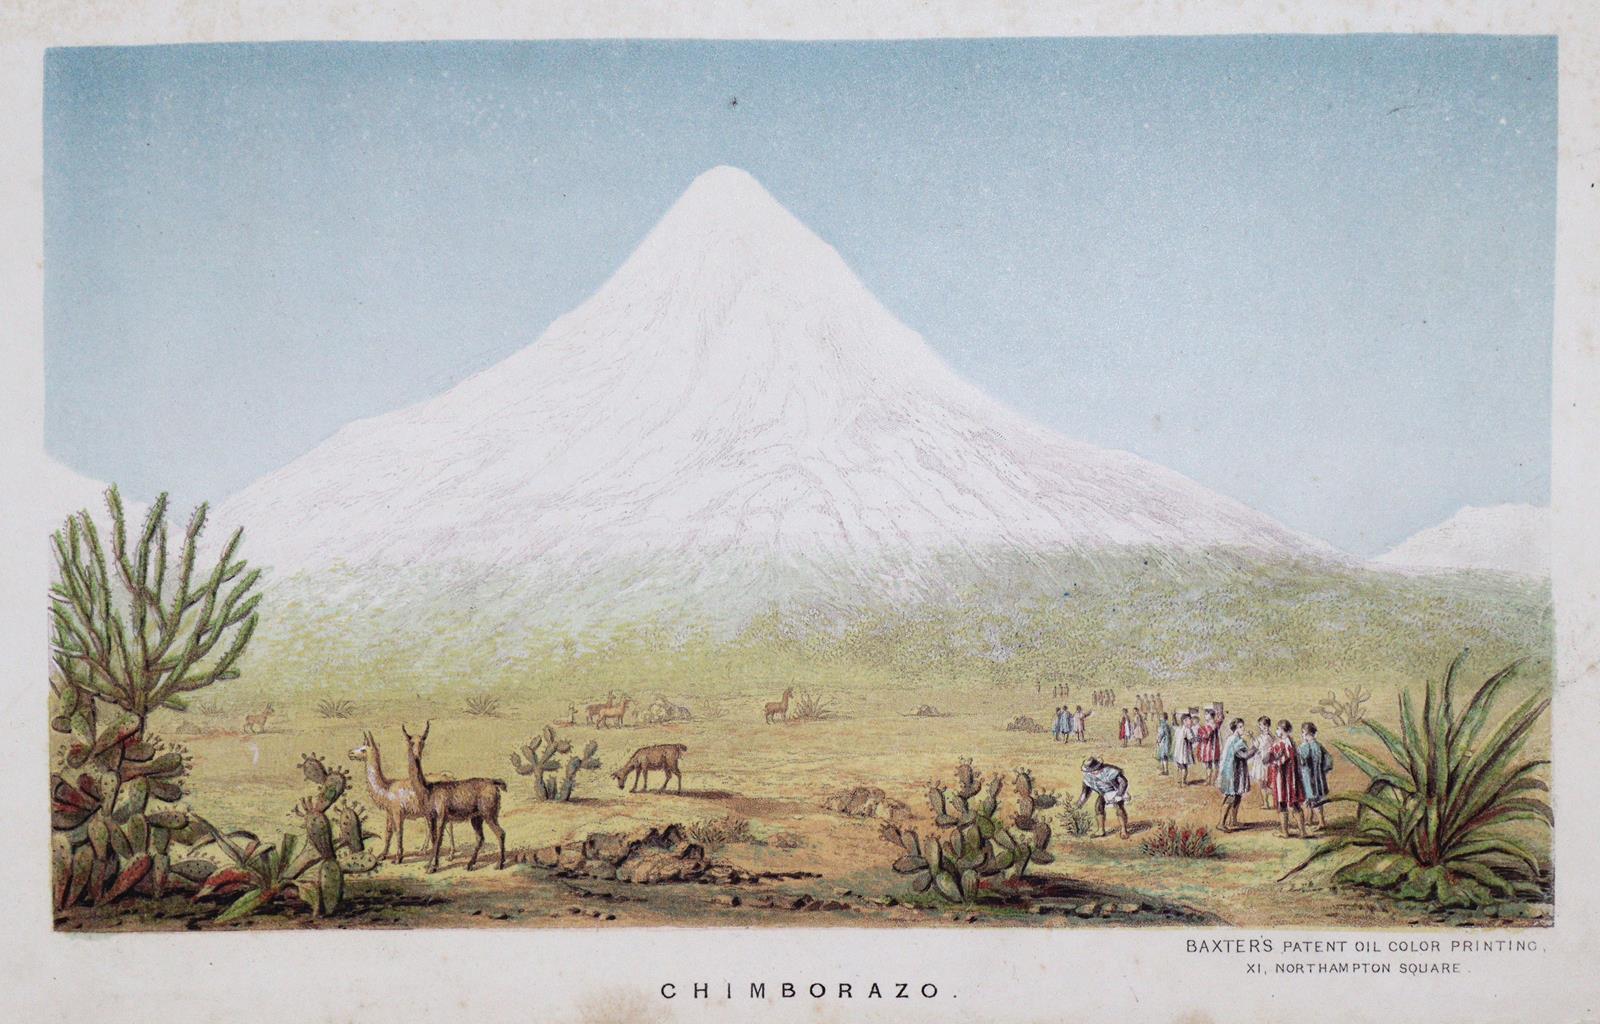 Humboldt,A.v. | Bild Nr.1